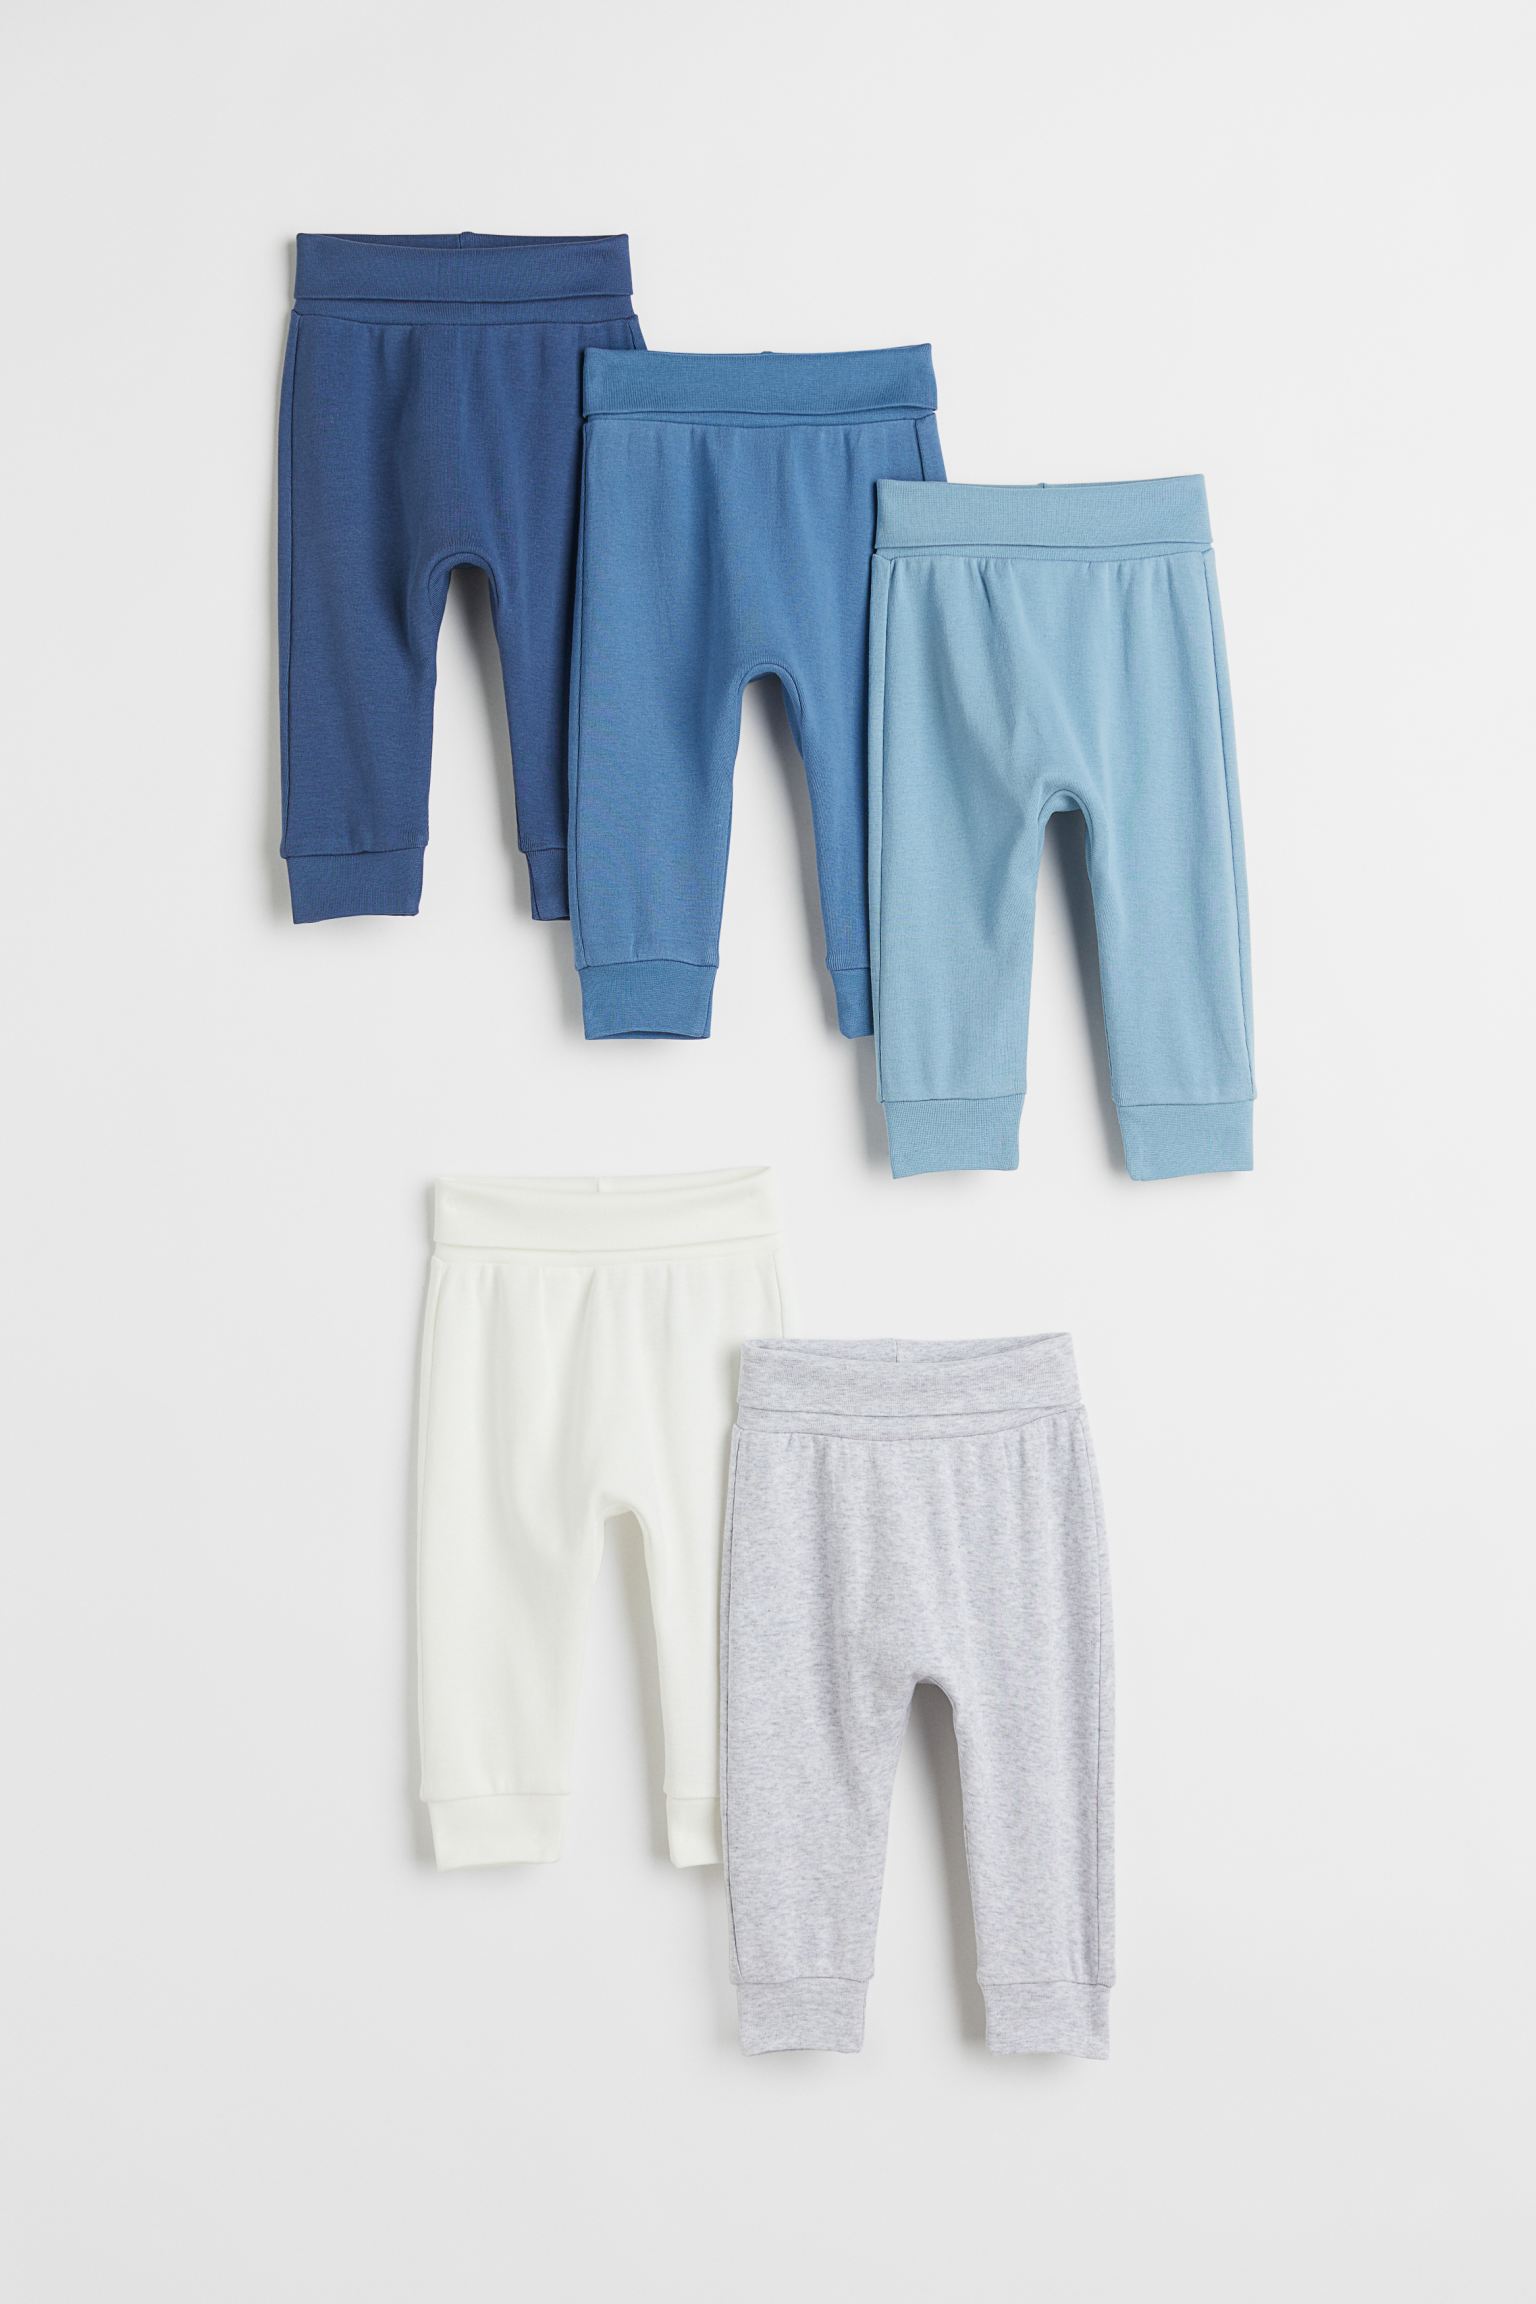 5 пар хлопковых брюк H&M 50 Синий/Серый/Белый (доставка из-за рубежа)